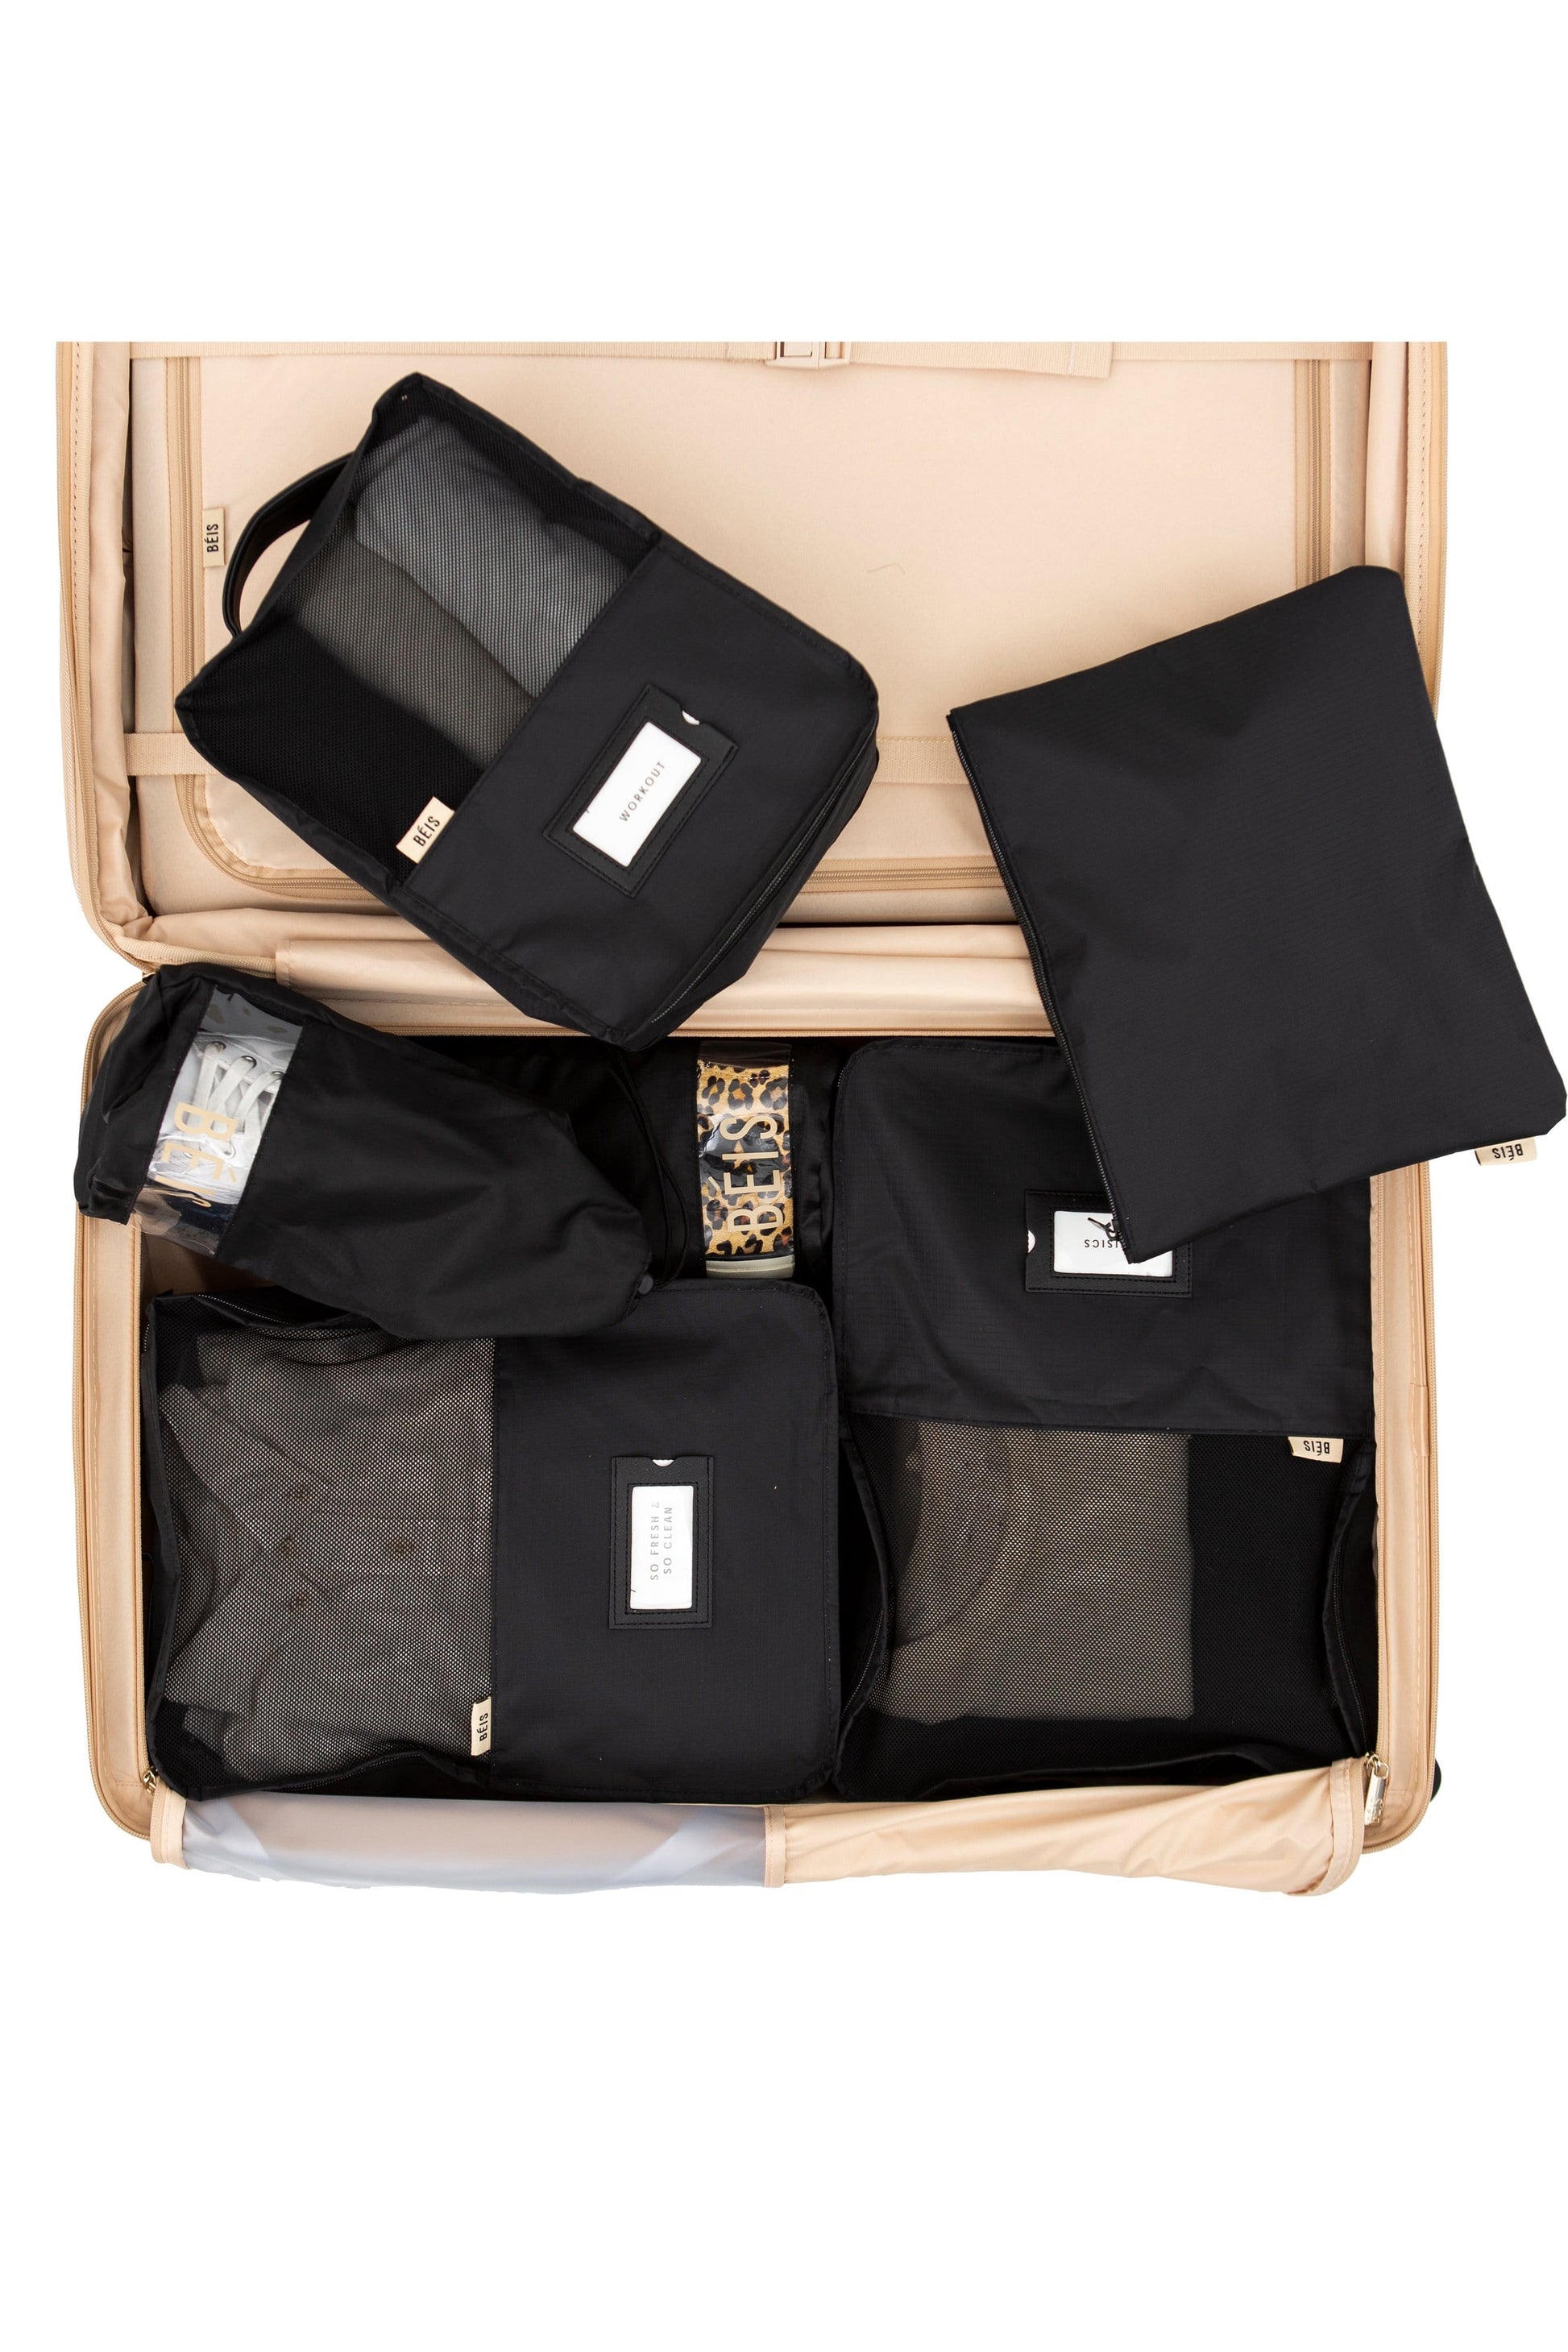 3Pcs Compression Packing Cubes Expandable Storage Travel Luggage Bags  Organiser – UKsShop